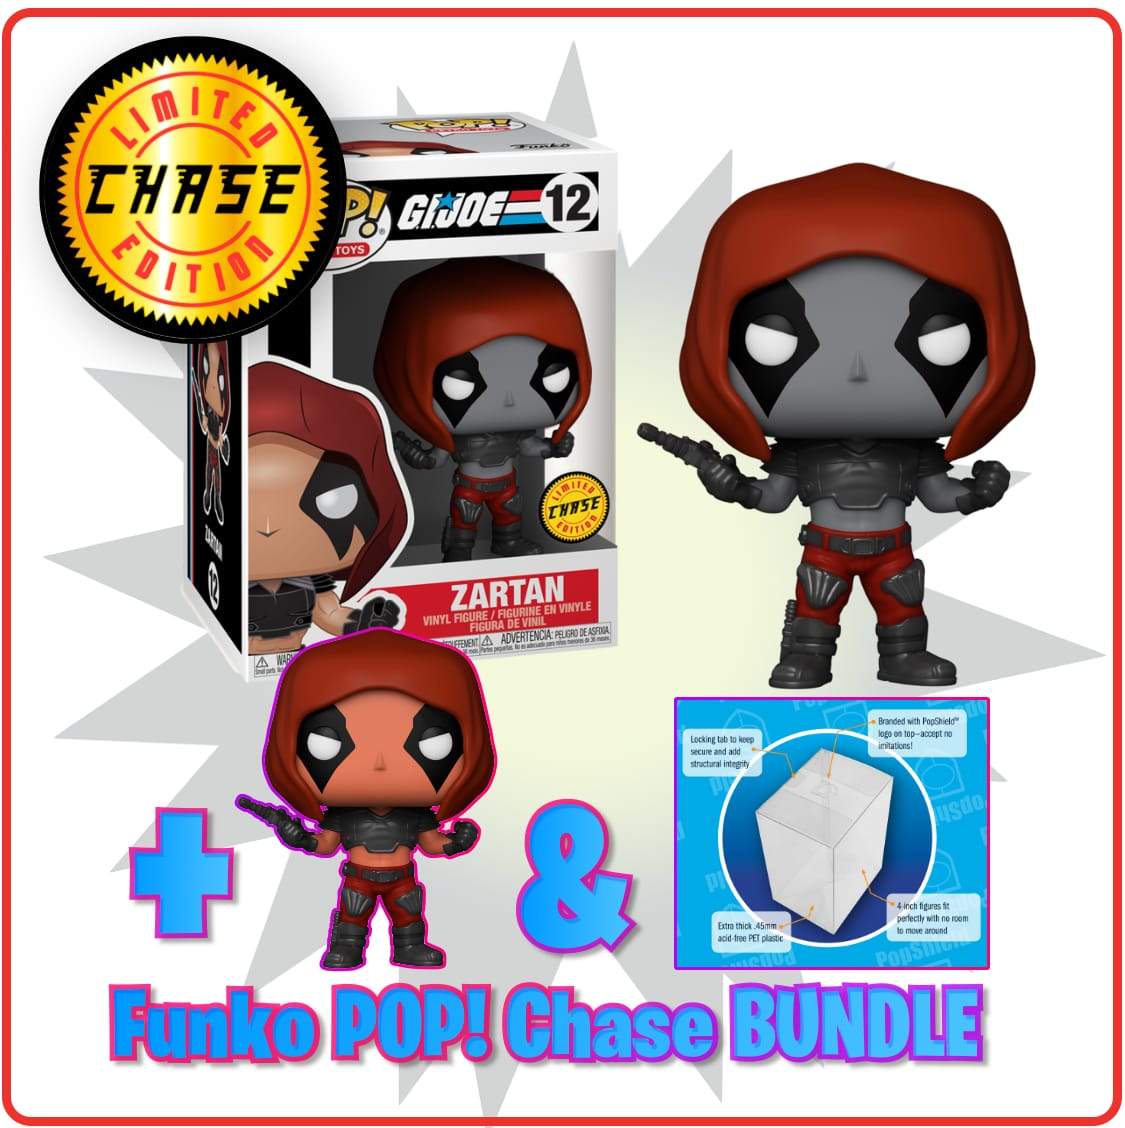 Funko POP! CHASE: G.I. Joe Zartan #12 2 Pack Bundle - Pop-O-Loco - Funko